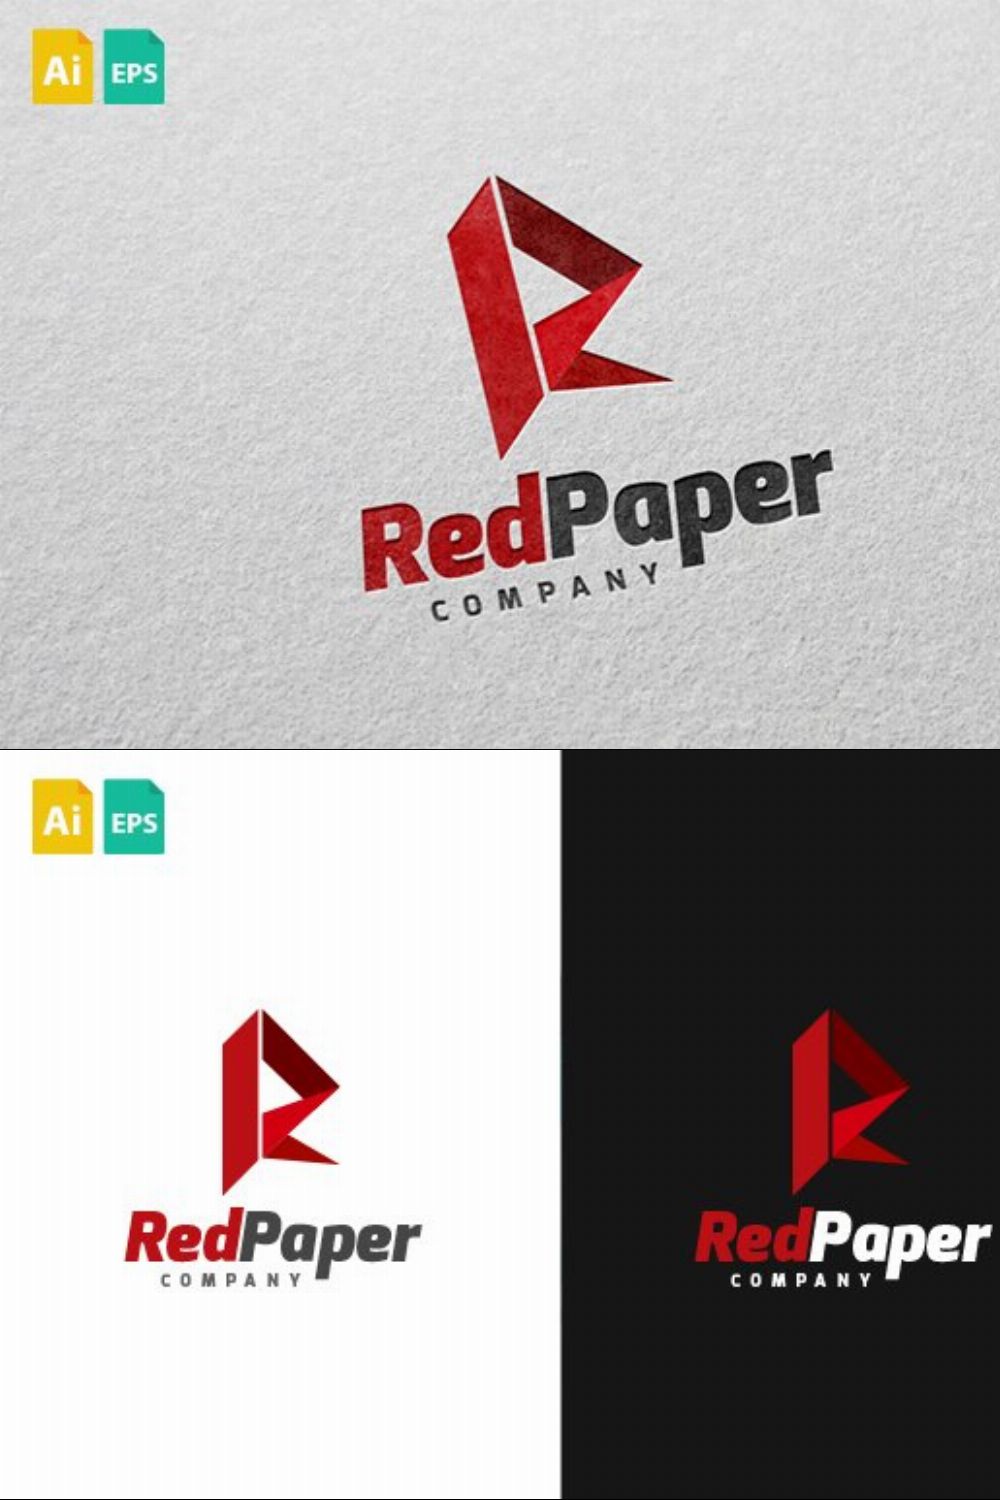 RedPaper Logo pinterest preview image.